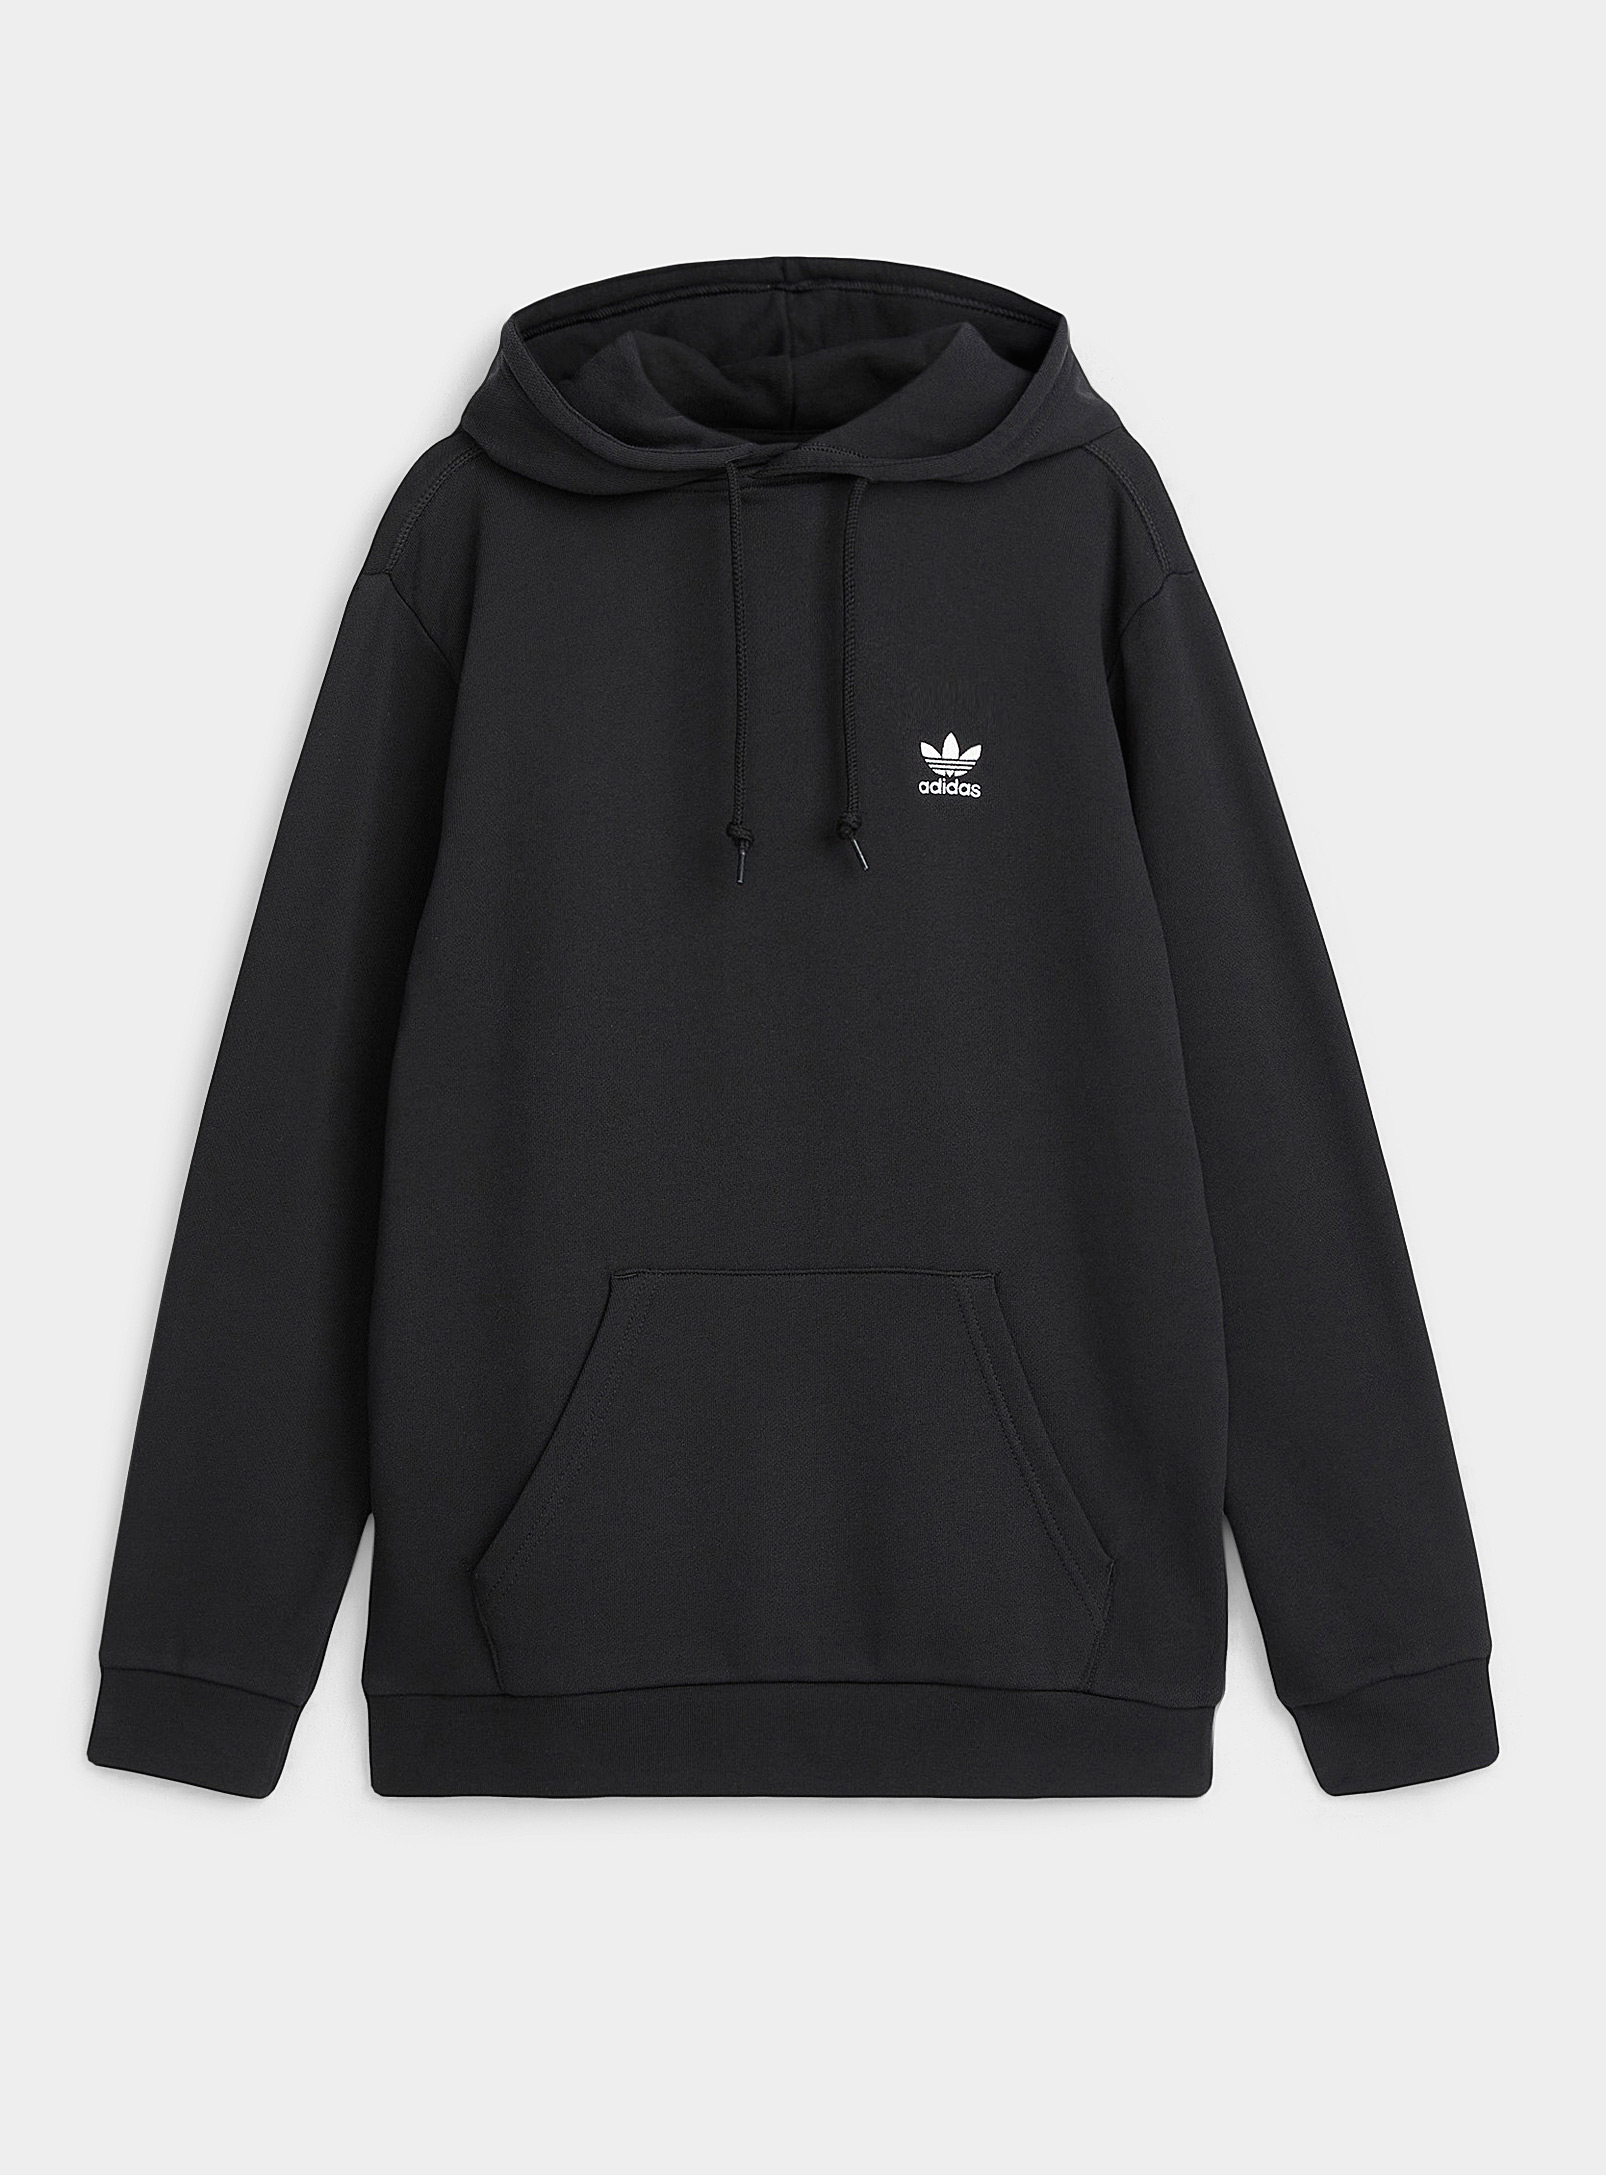 Adidas Originals - Men's Trefoil logo hoodie